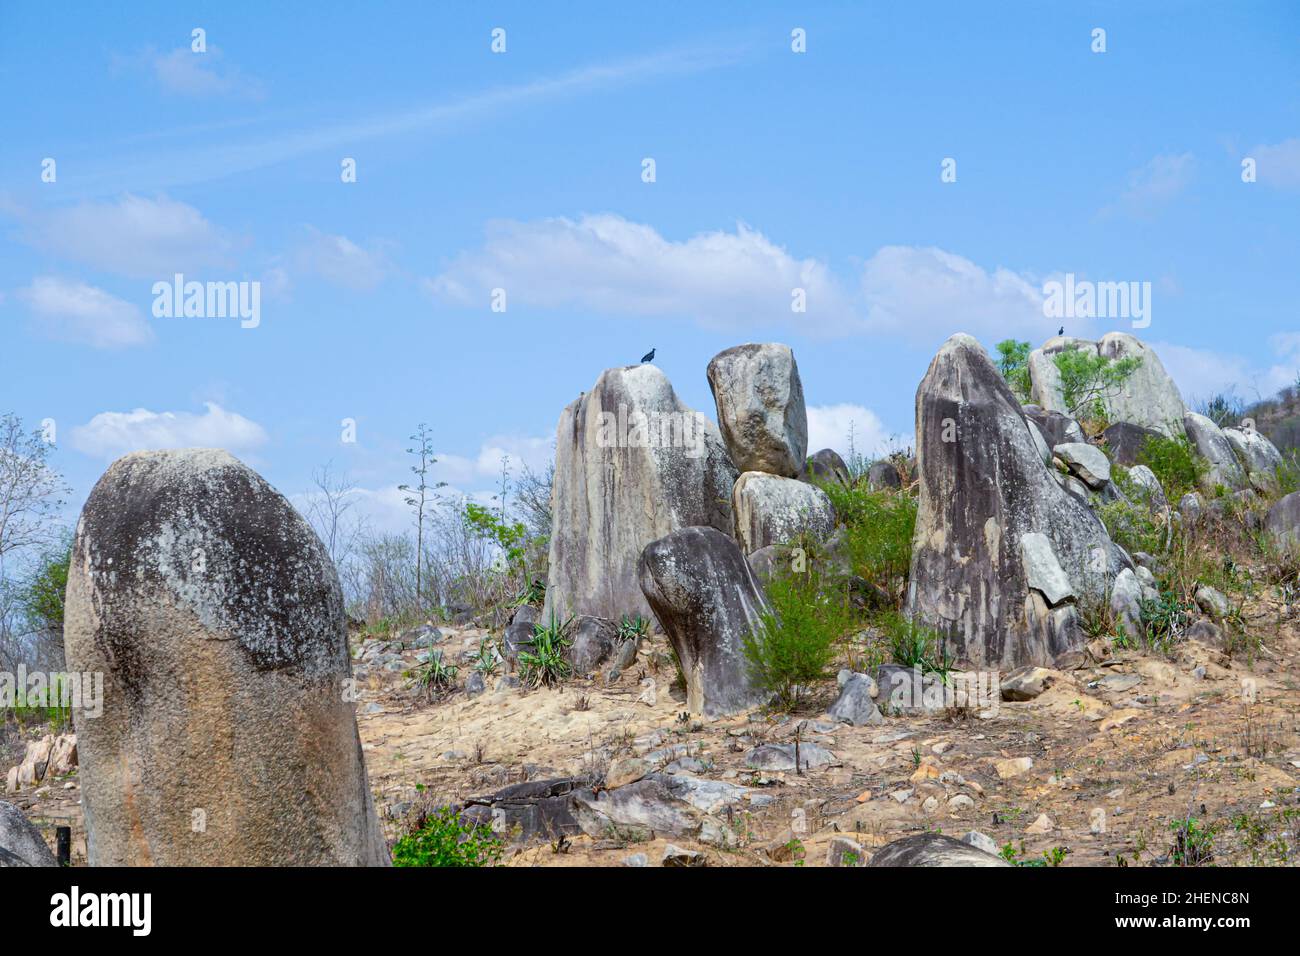 Catinga landscape with big rocks in la Cabrera region in Brazil Stock Photo